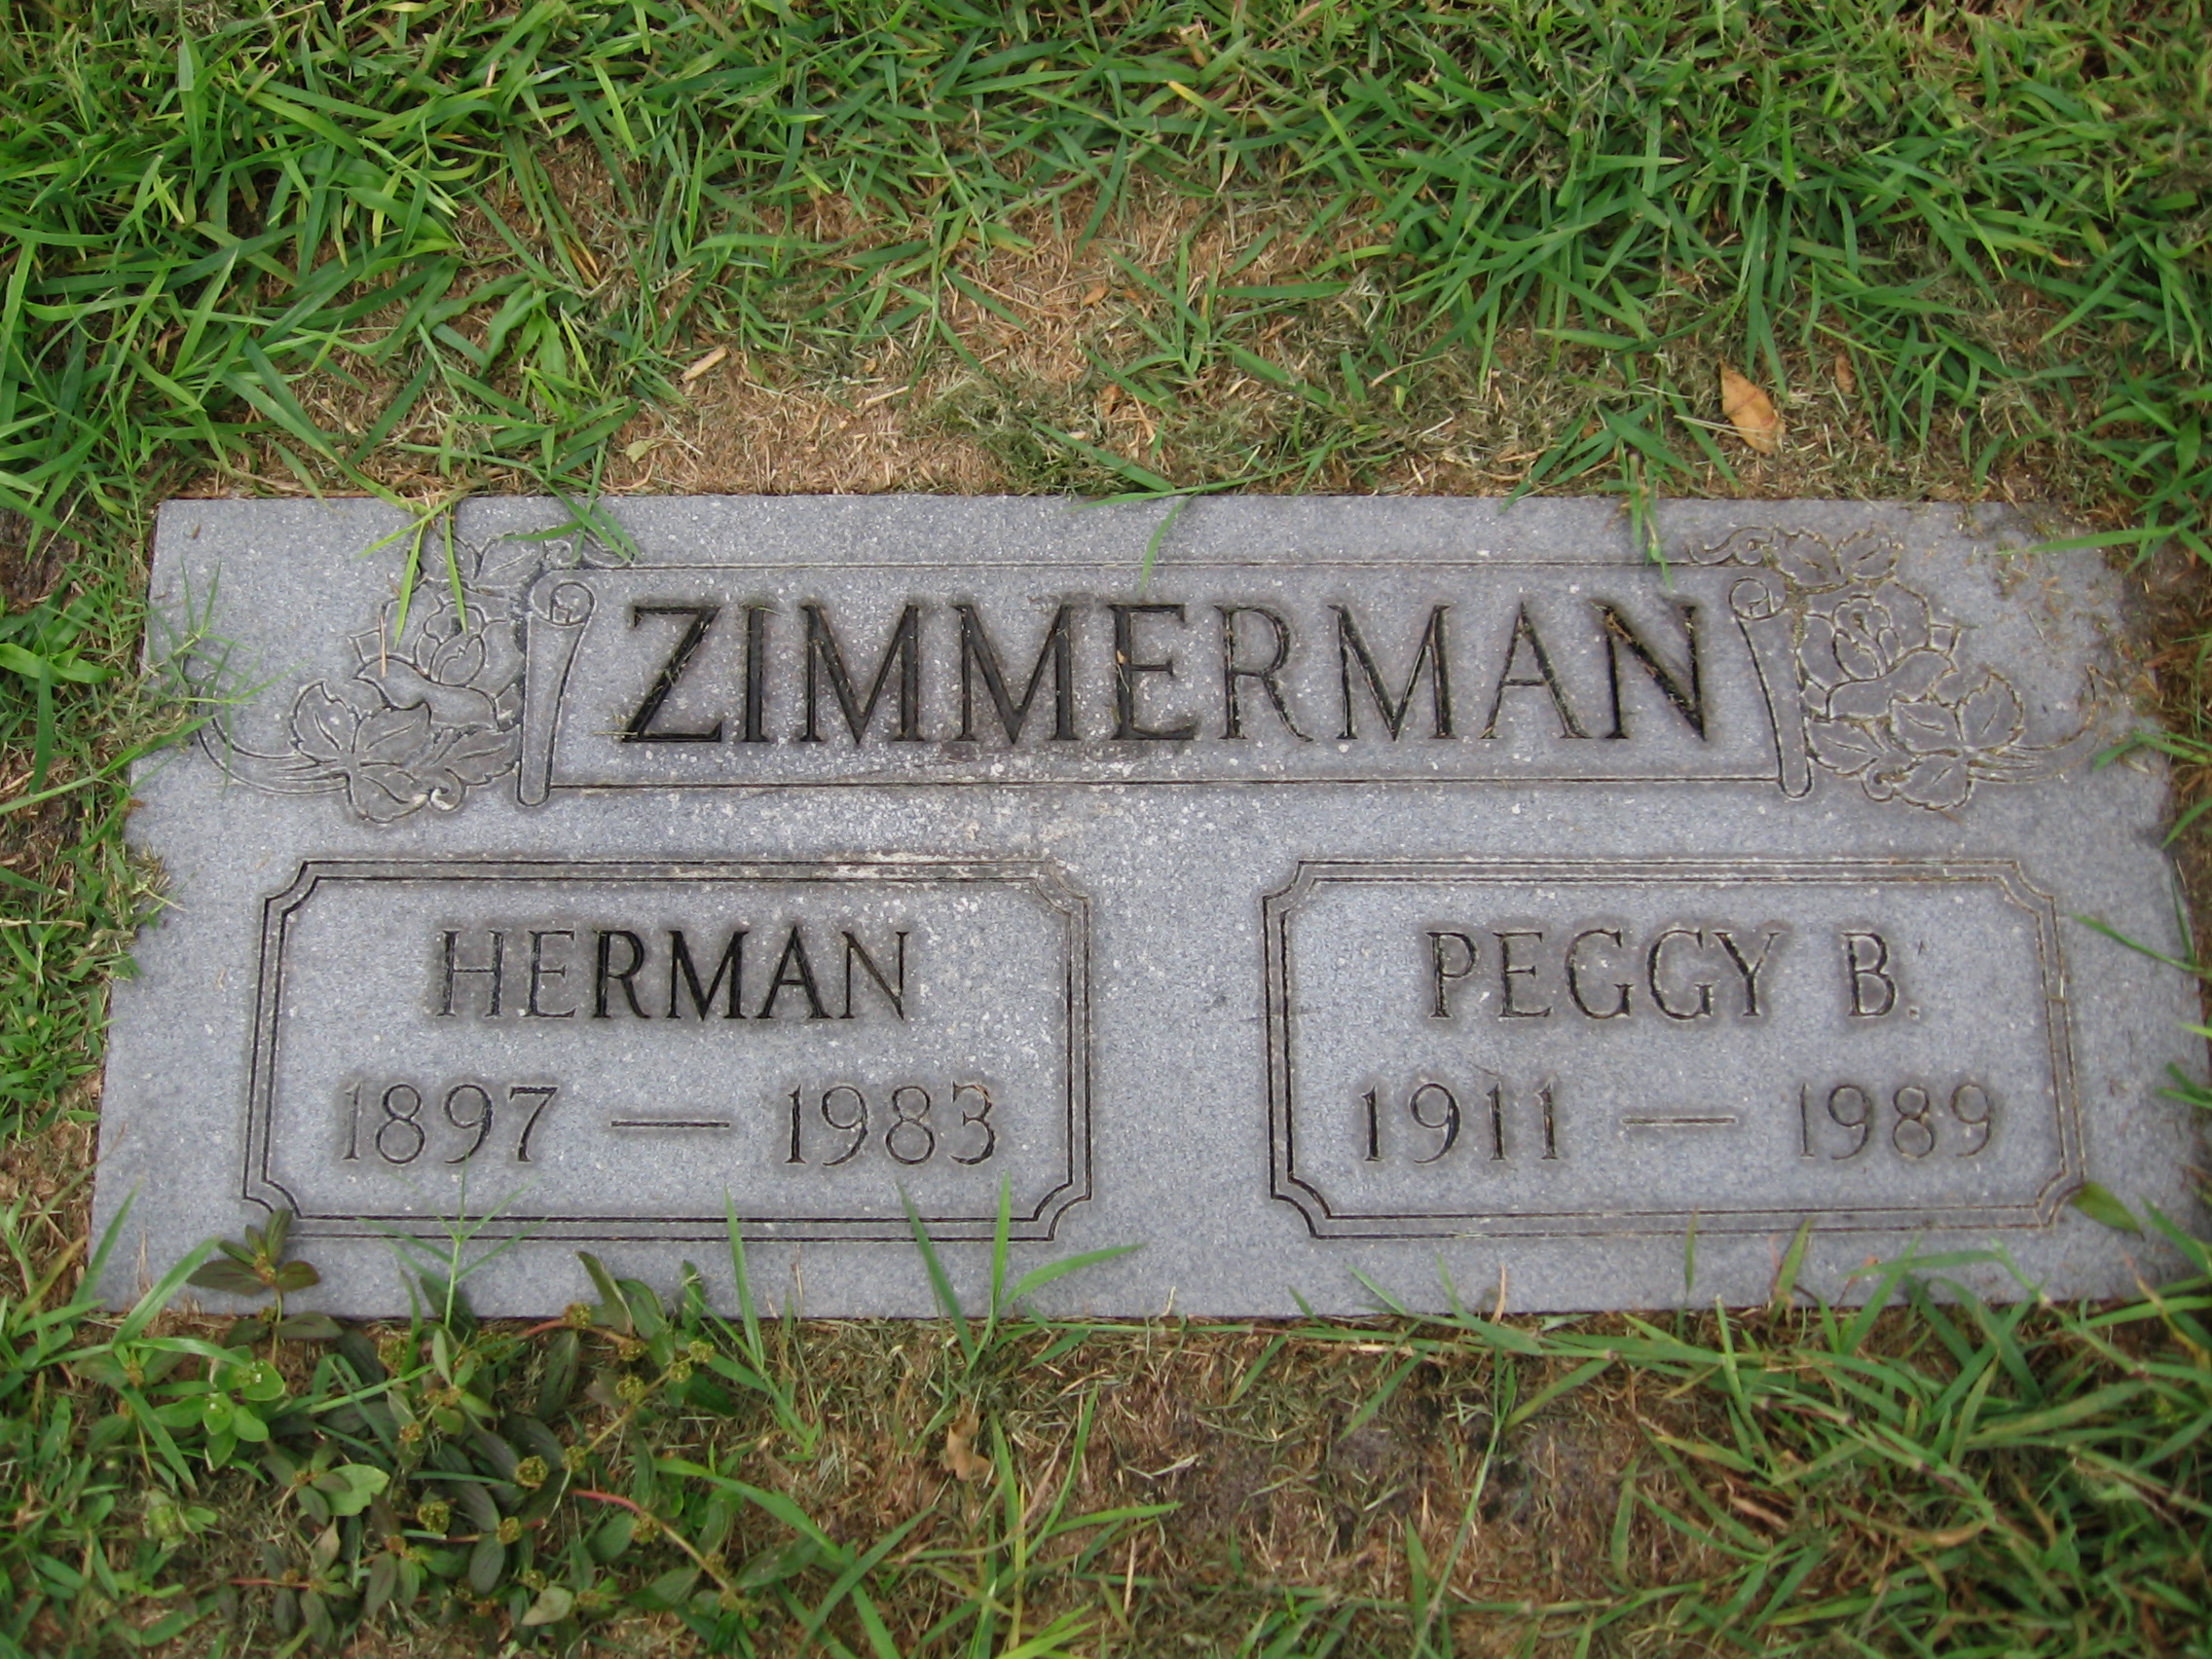 Peggy B Zimmerman